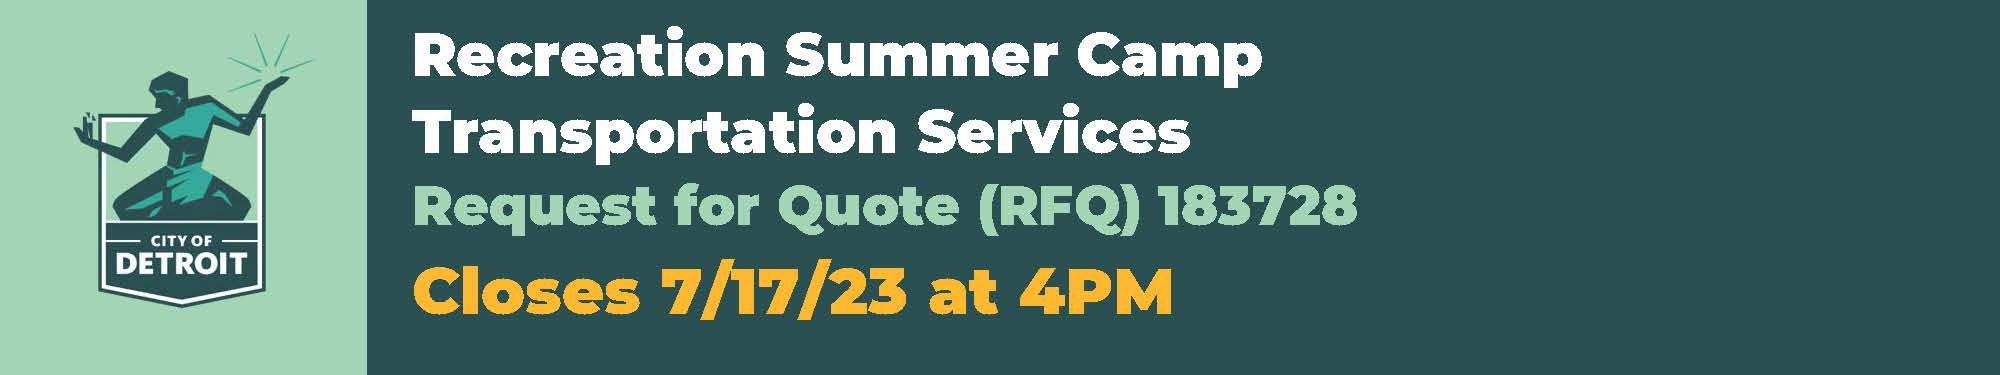 Take Part: Recreation Summer Camp Transportation Services